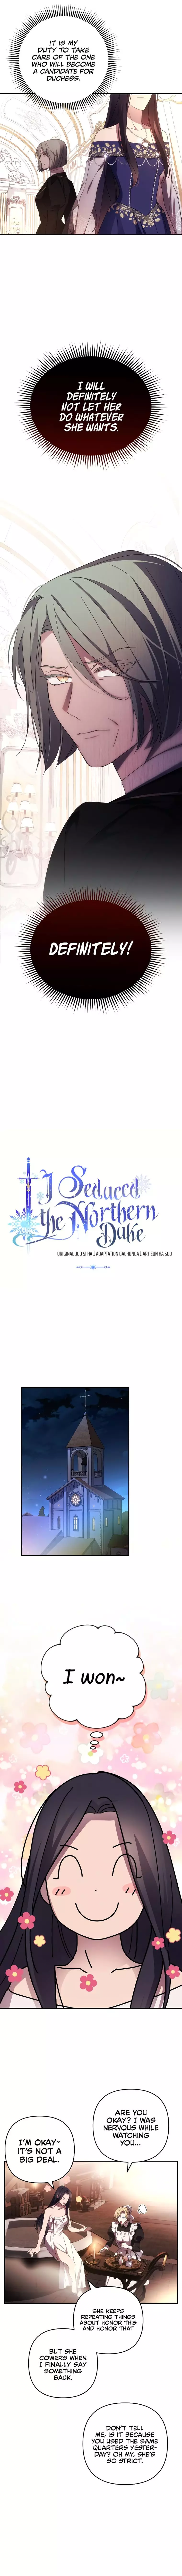 I Will Seduce The Northern Duke - 23 page 7-eb17a362